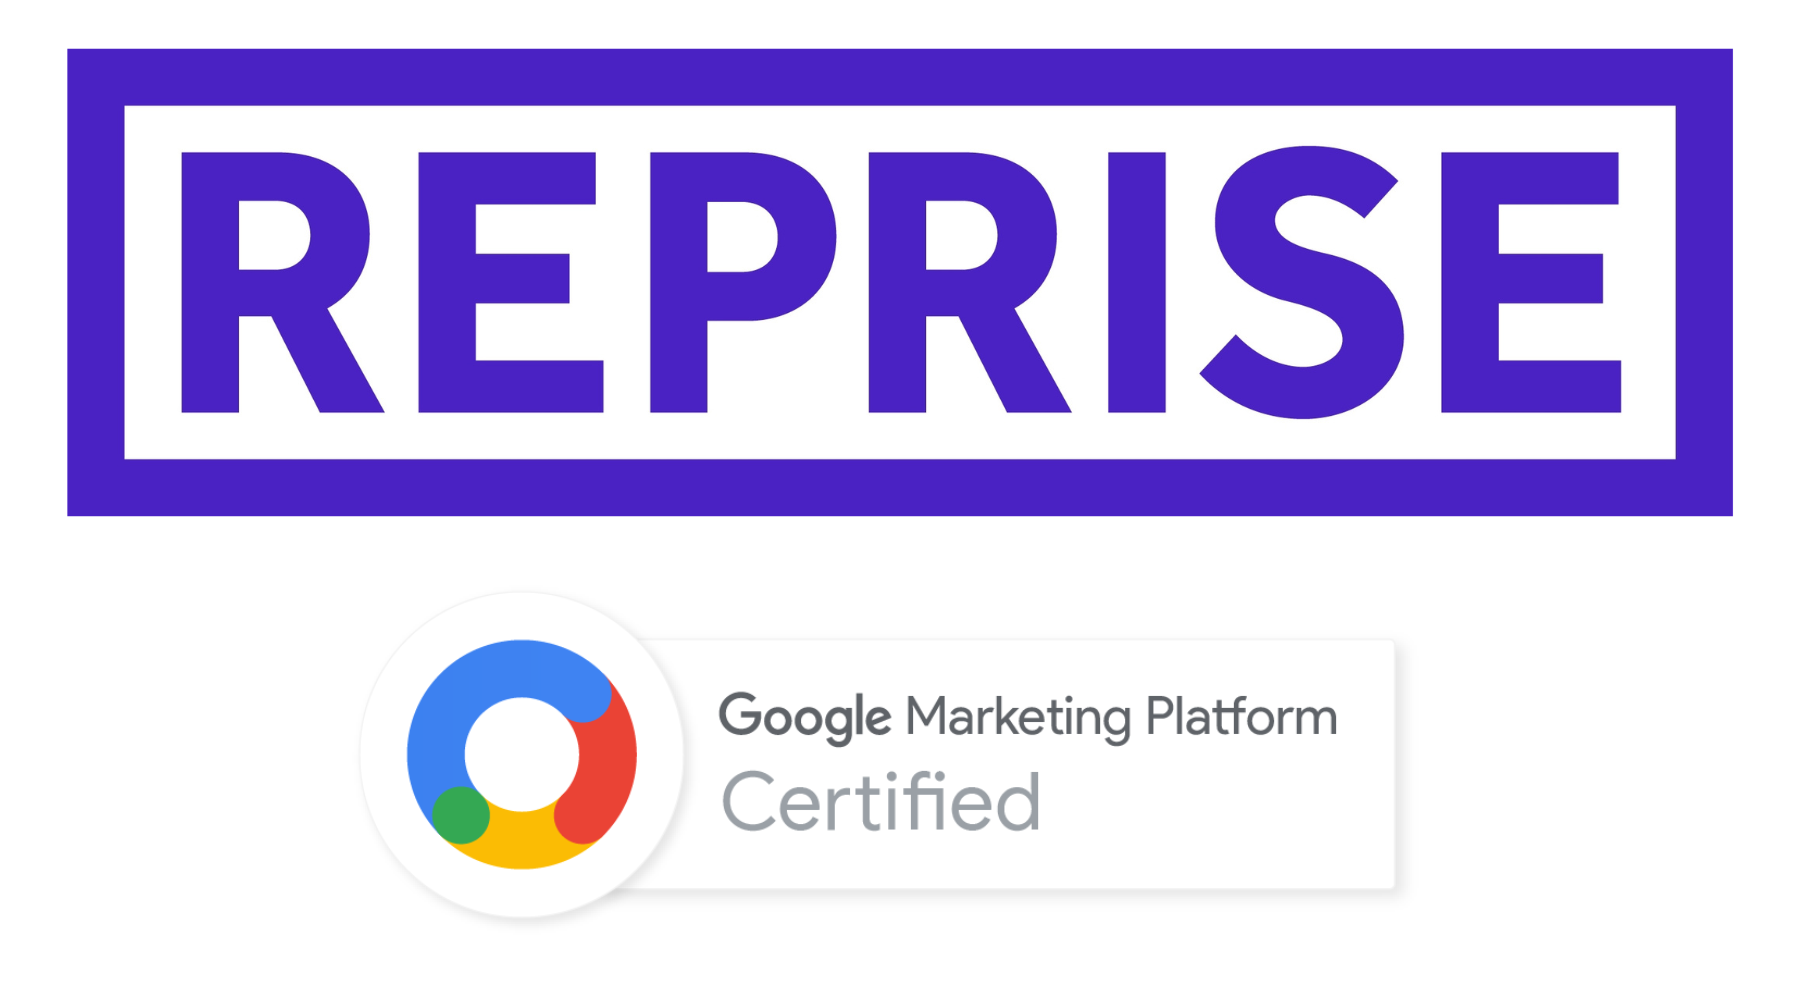 Reprise Digital MENA Receives Google Marketing Platform Certification and Reseller Status